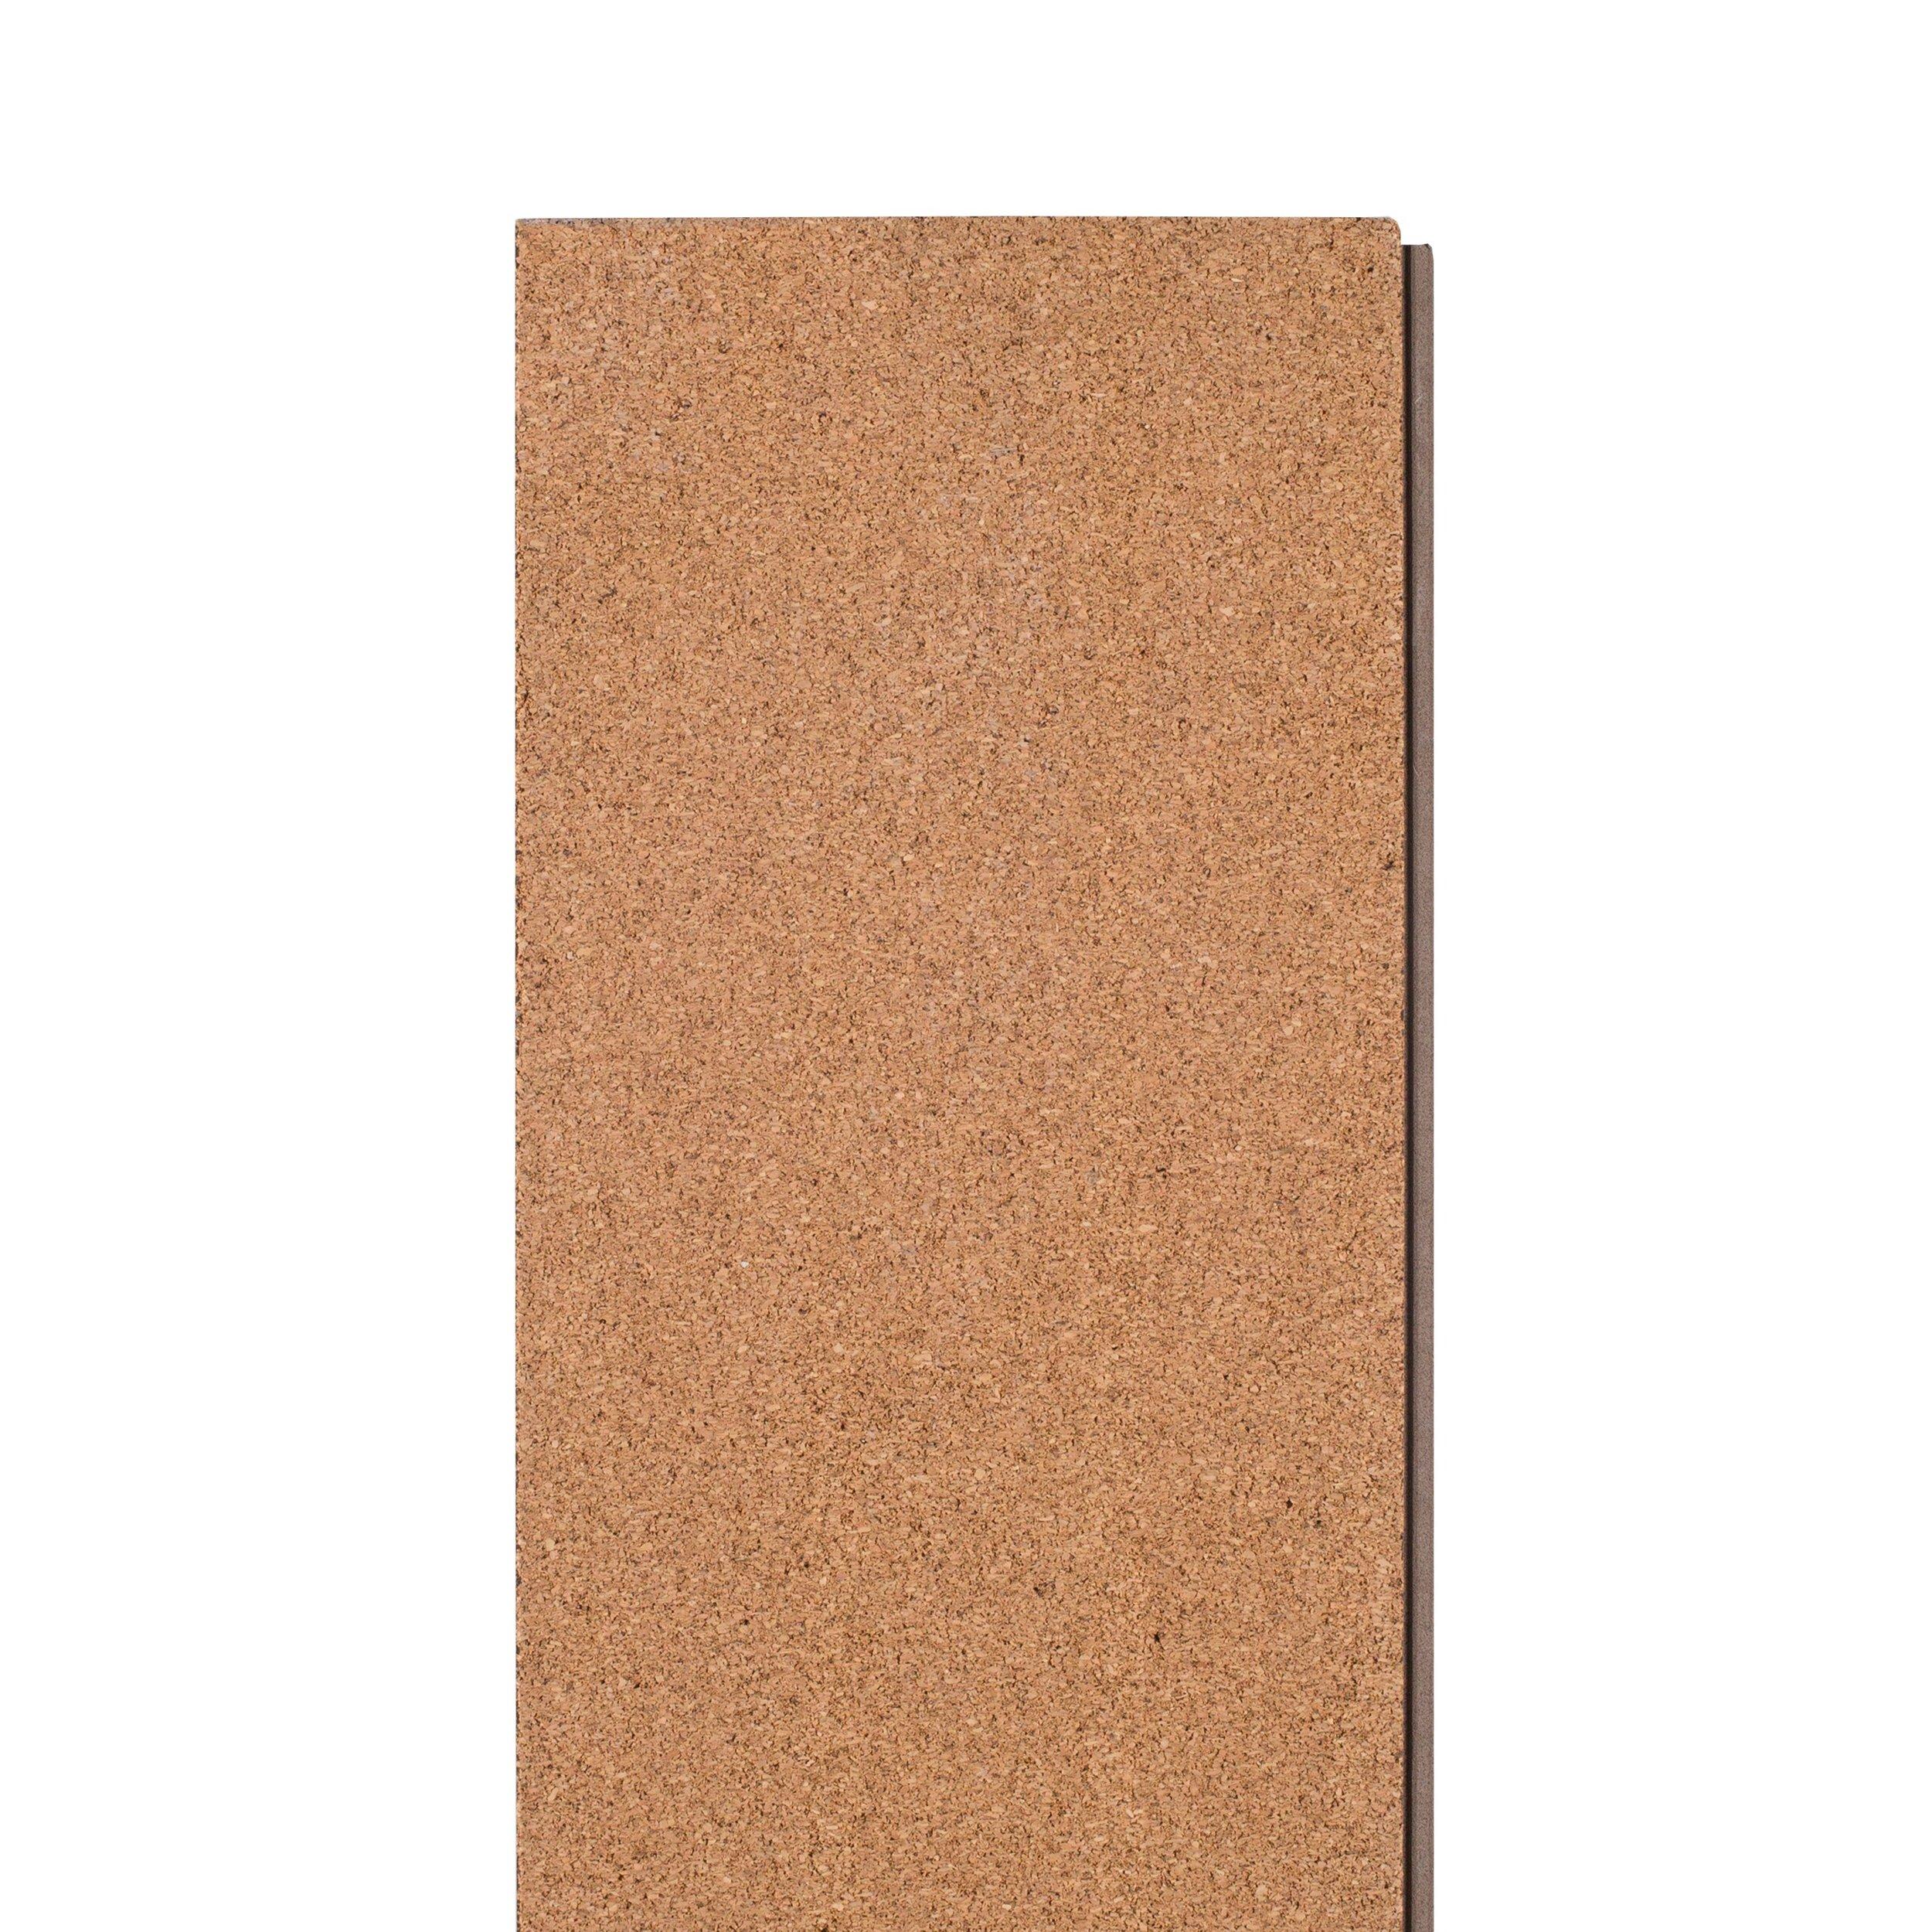 Adelino High Gloss Rigid Core Luxury Vinyl Plank - Cork Back